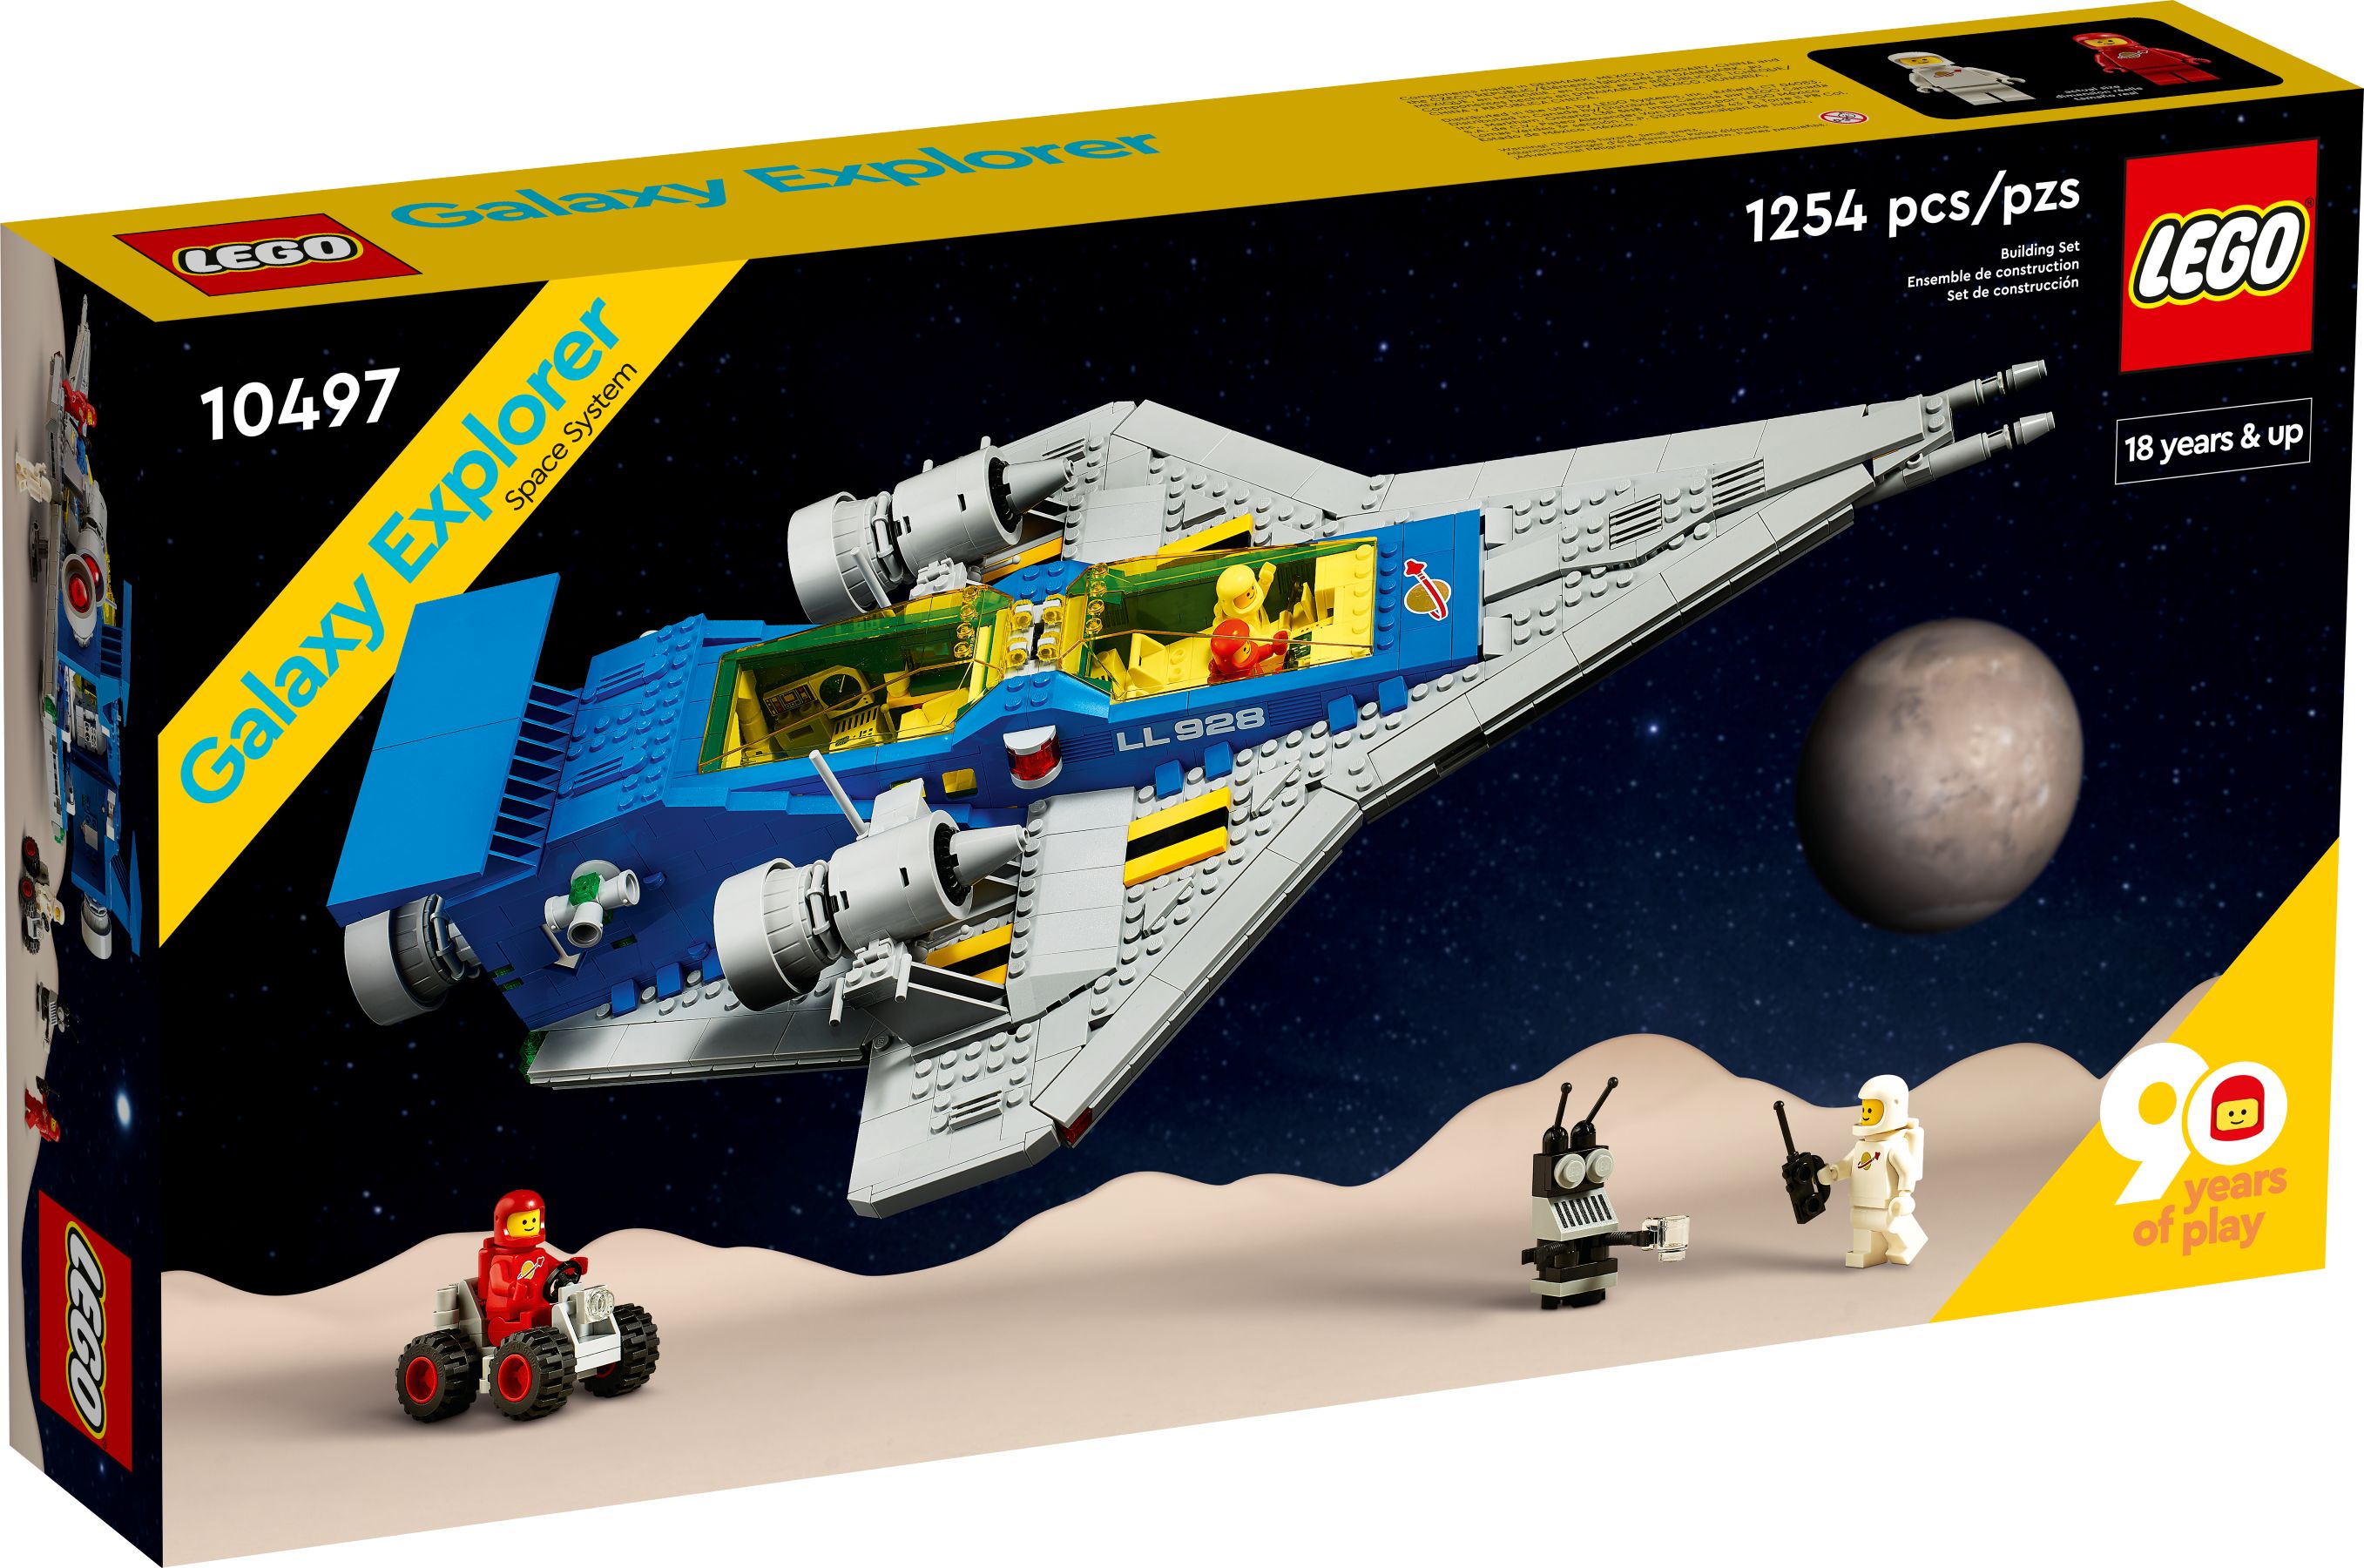 LEGO Advanced Models 10497 Galaxy Explorer LEGO_10497_alt1.jpg